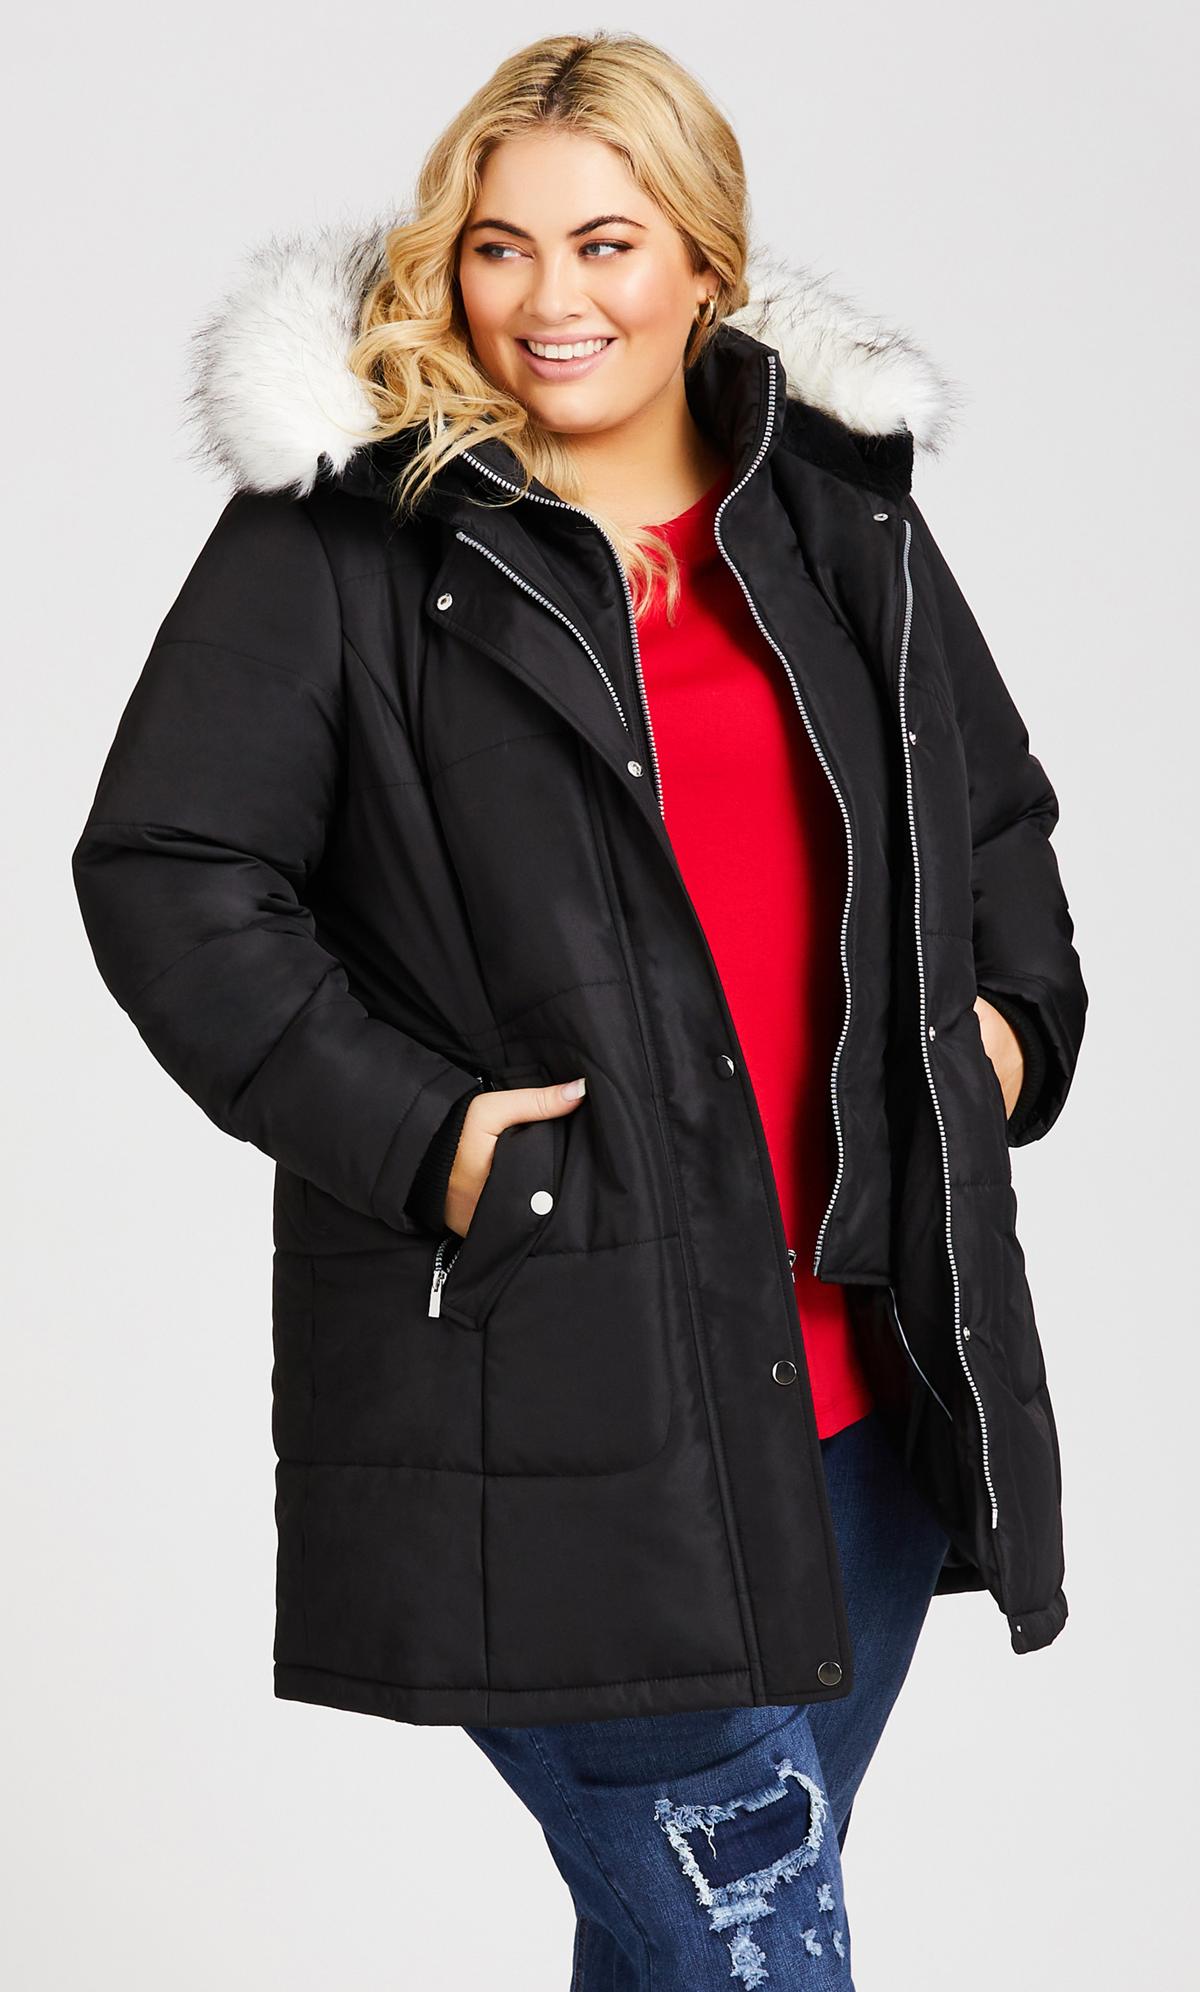 Vestie Black Hooded Puffer Coat 2